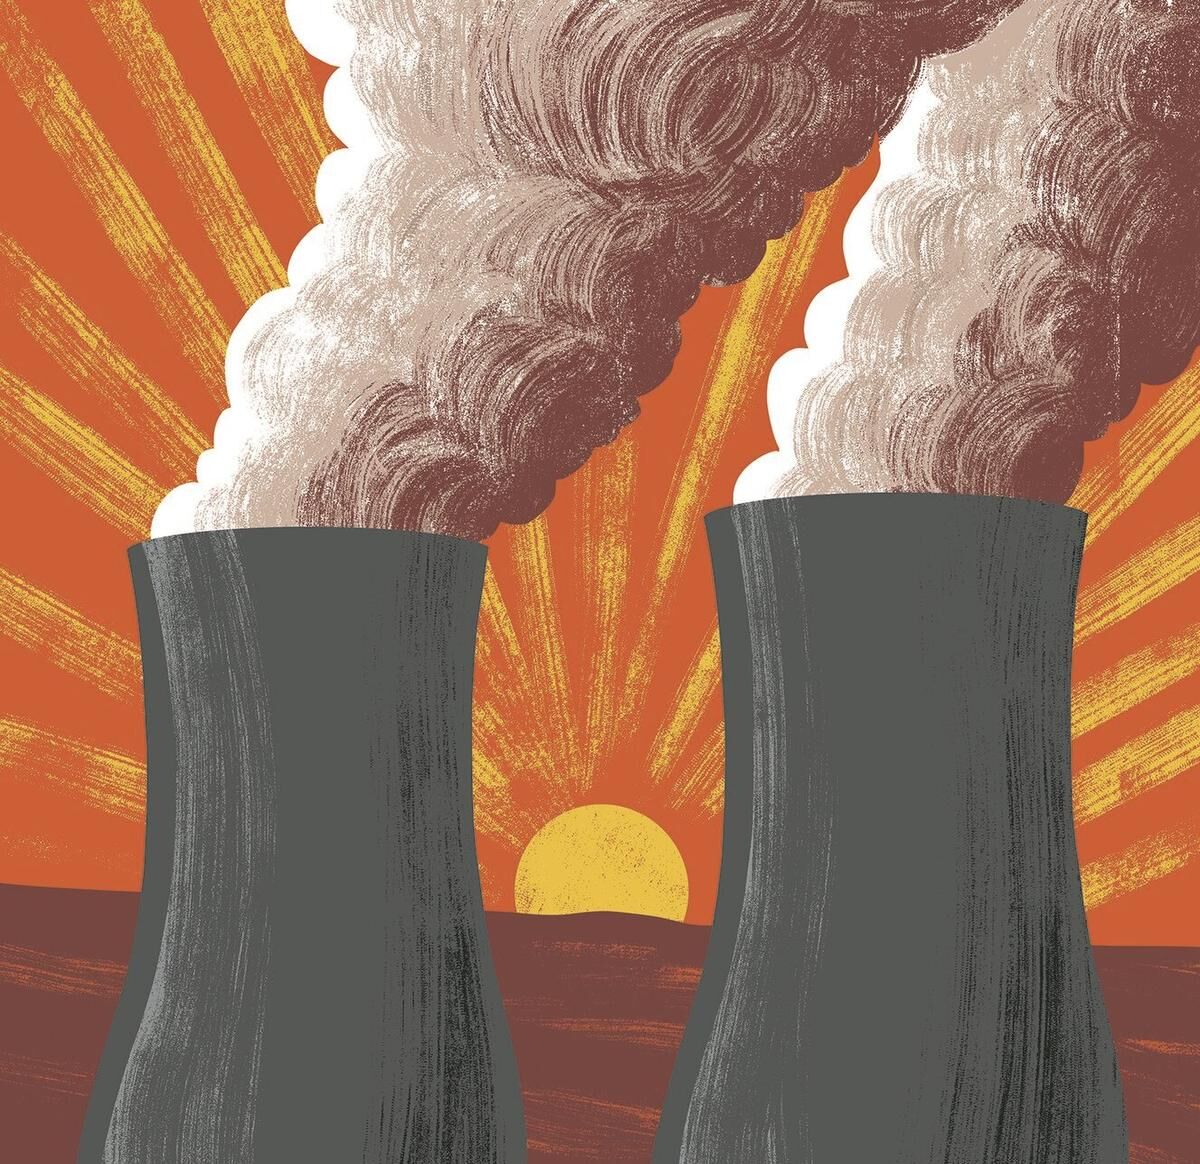 The “Plutocene” danger – nuclear war, radioactive pollution, global heating  | nuclear-news